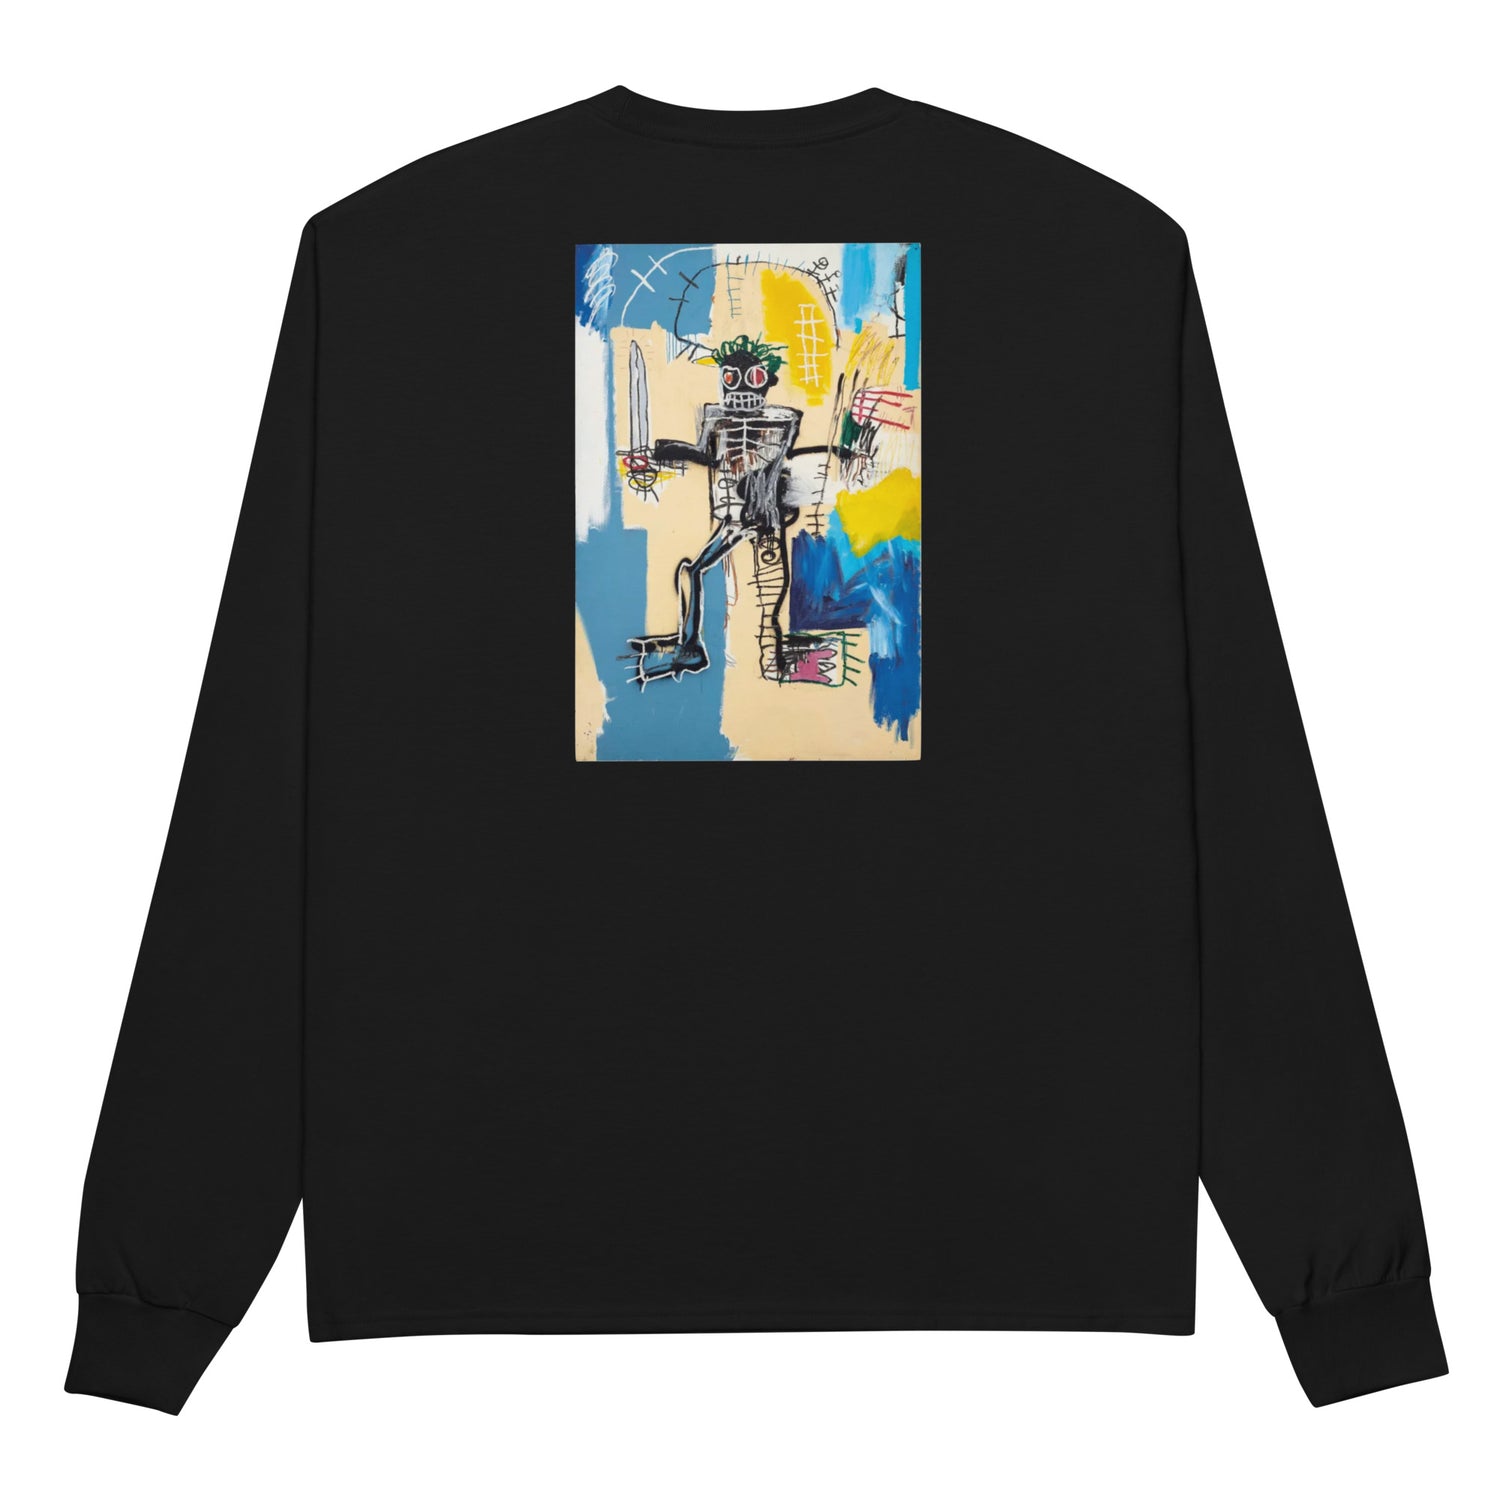 Jean-Michel Basquiat "Warrior" Artwork Embroidered + Printed Premium Champion Streetwear Long Sleeve Shirt Black